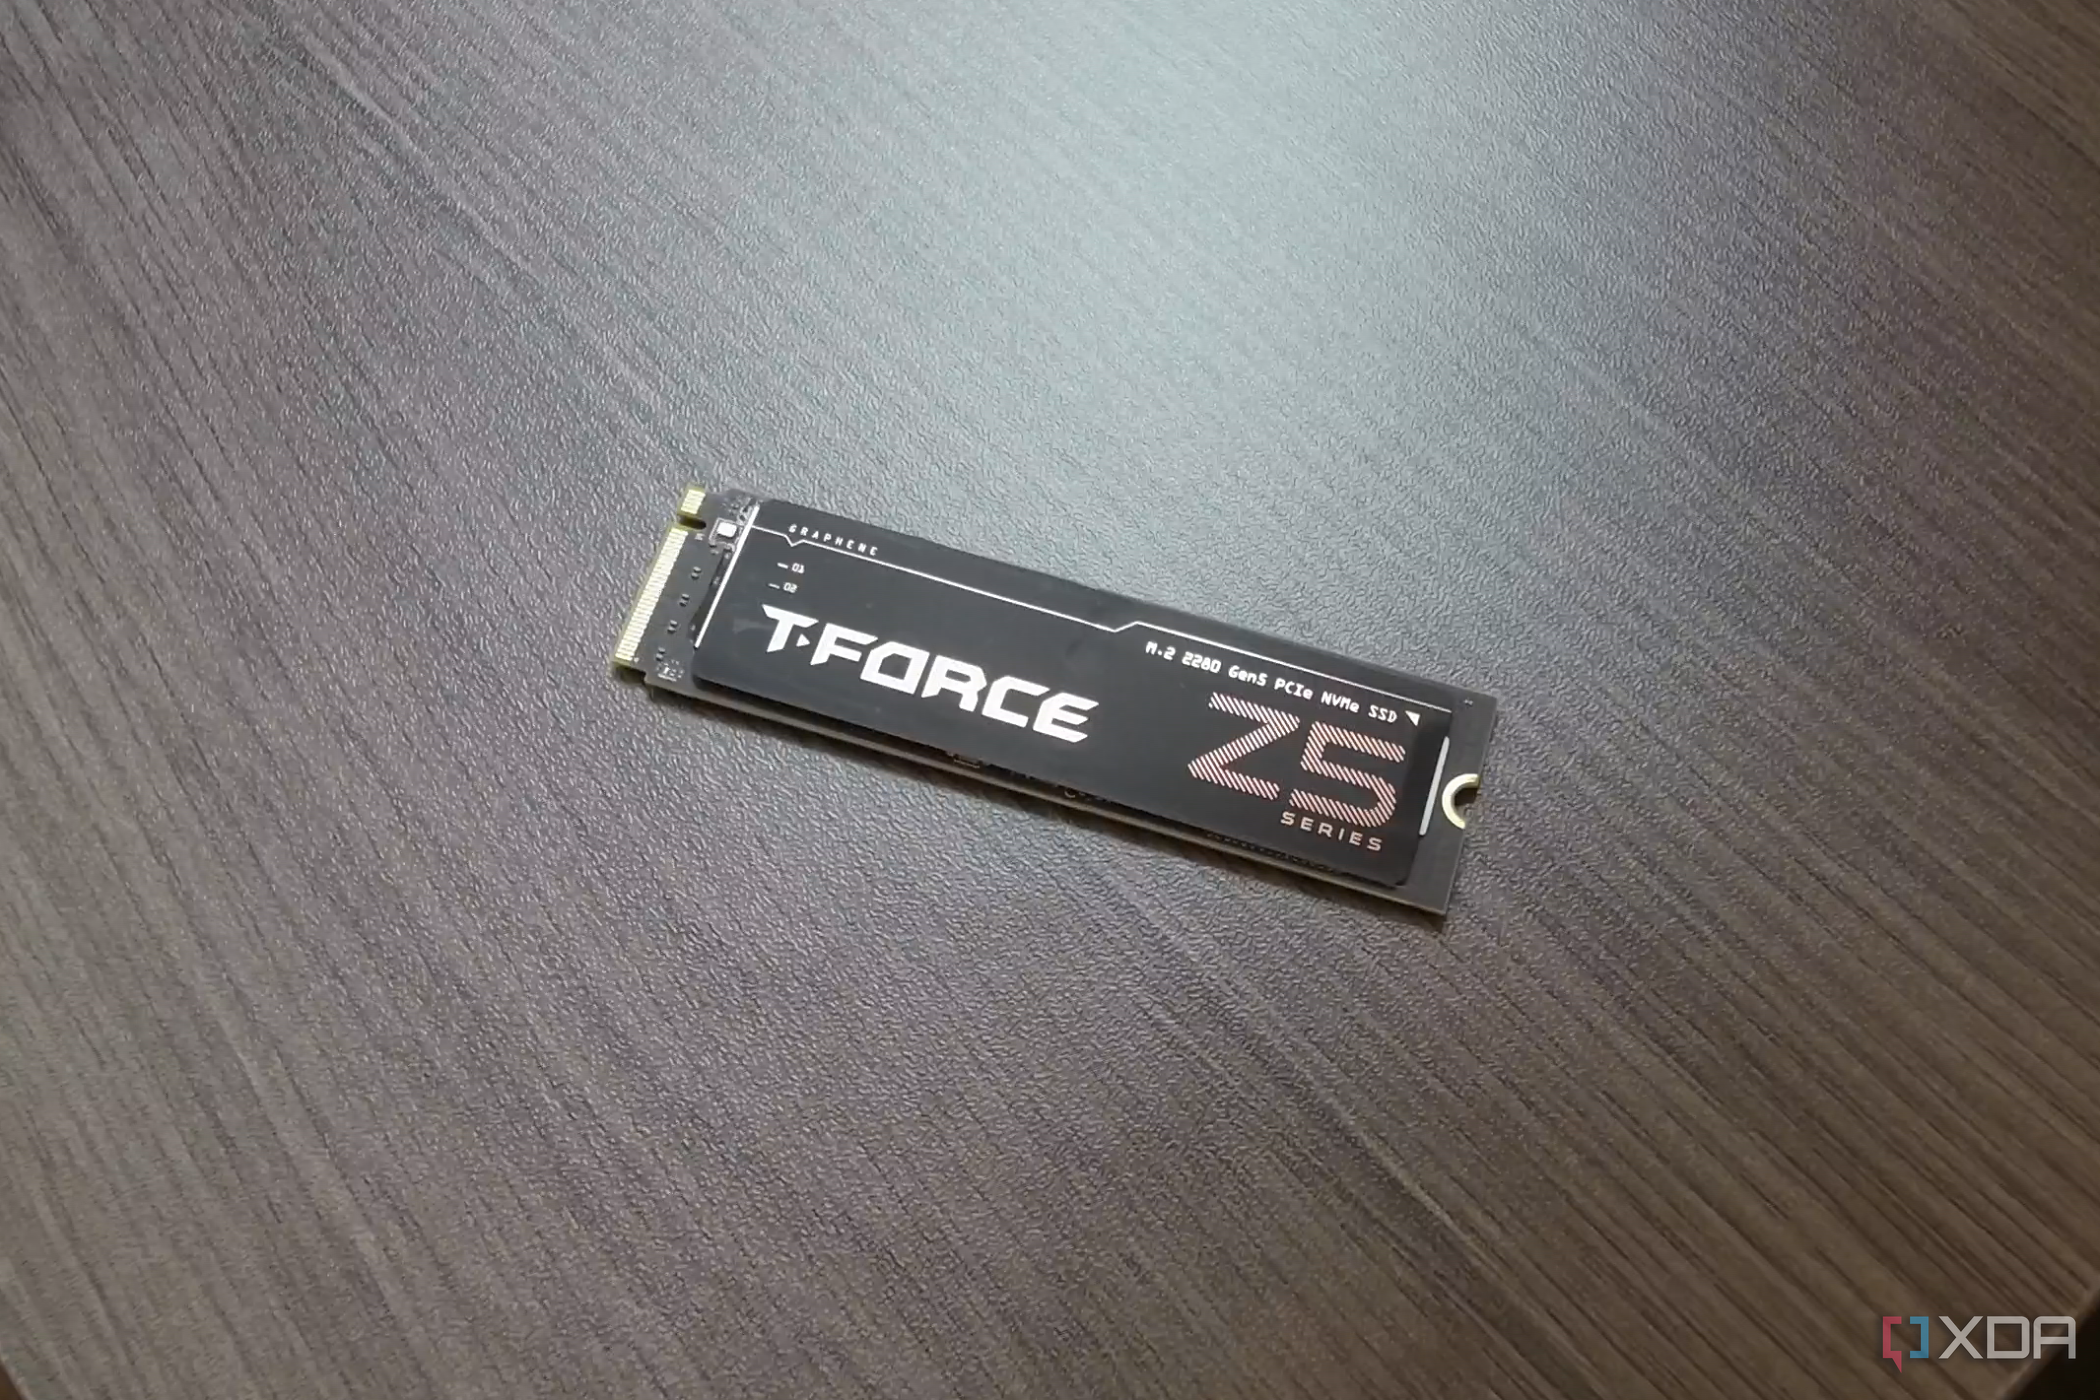 Z540 M.2 PCIe SSD 1TB